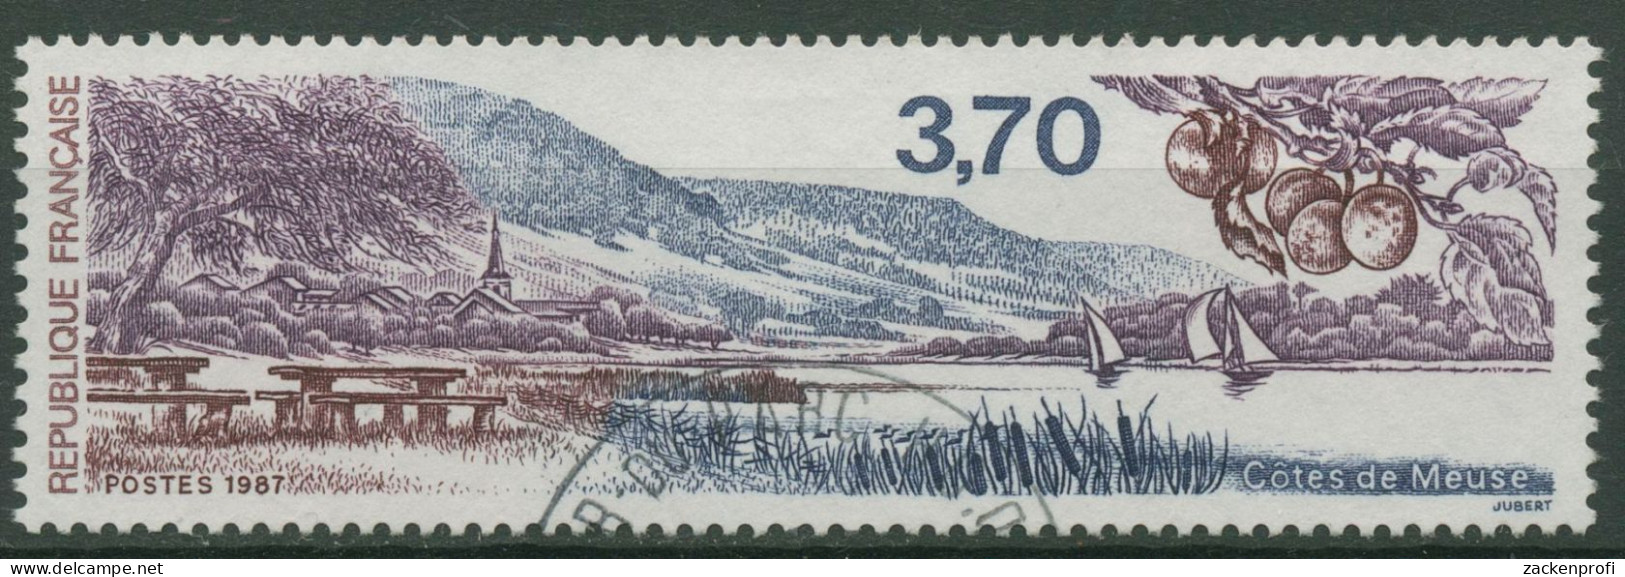 Frankreich 1987 Tourismus Landschaft An Der Maas 2609 Gestempelt - Used Stamps